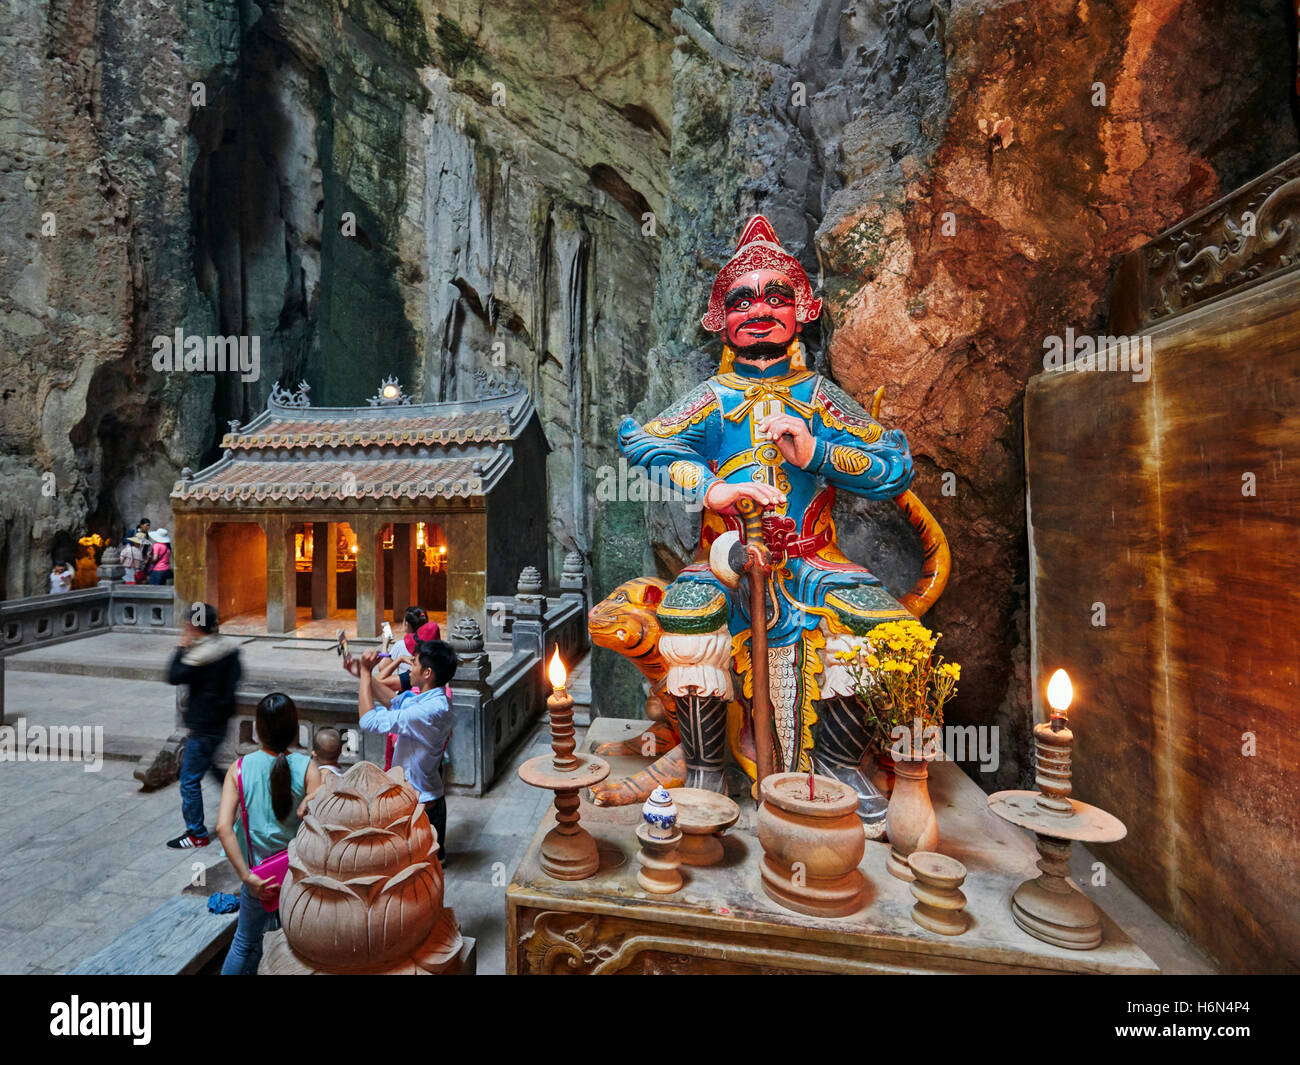 Huyen Khong Grotta. Thuy figlio di montagna, le montagne di marmo, Da Nang, Vietnam. Foto Stock